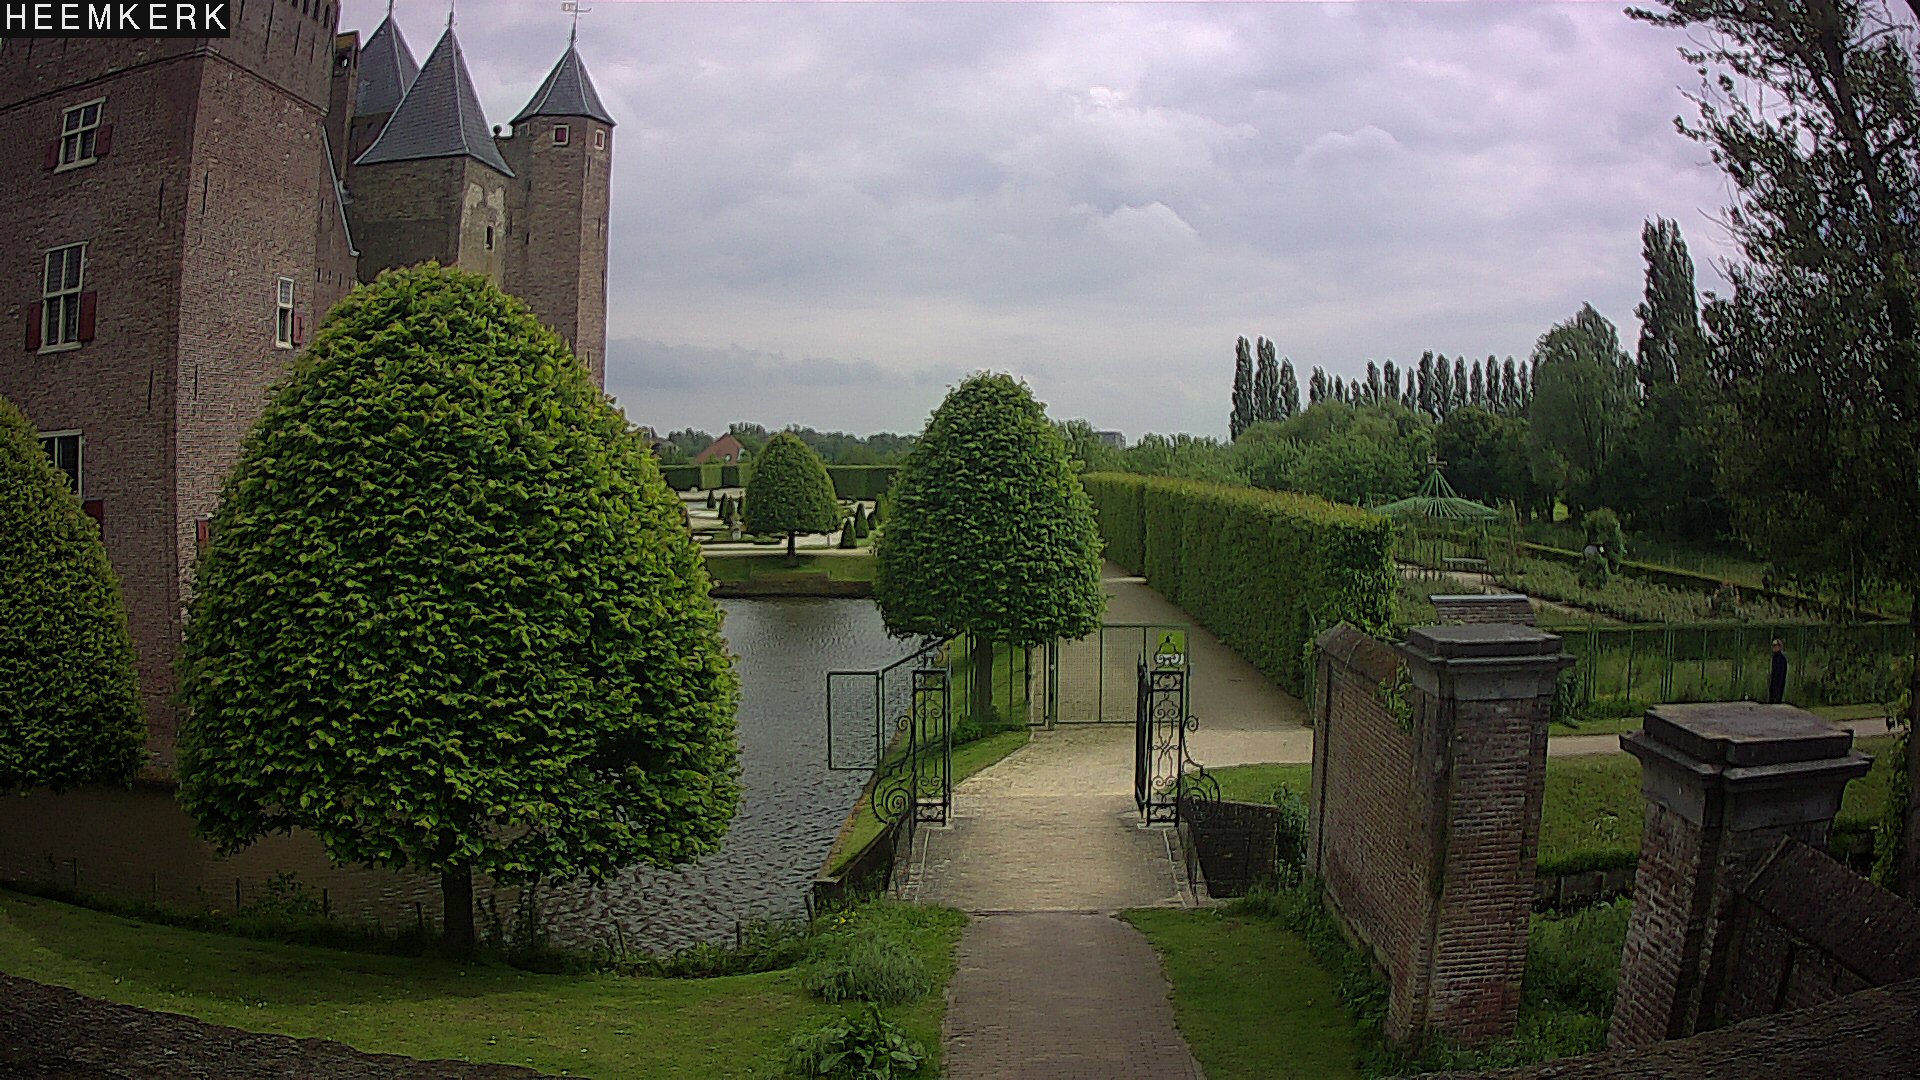 Heemskerk Tor. 15:46